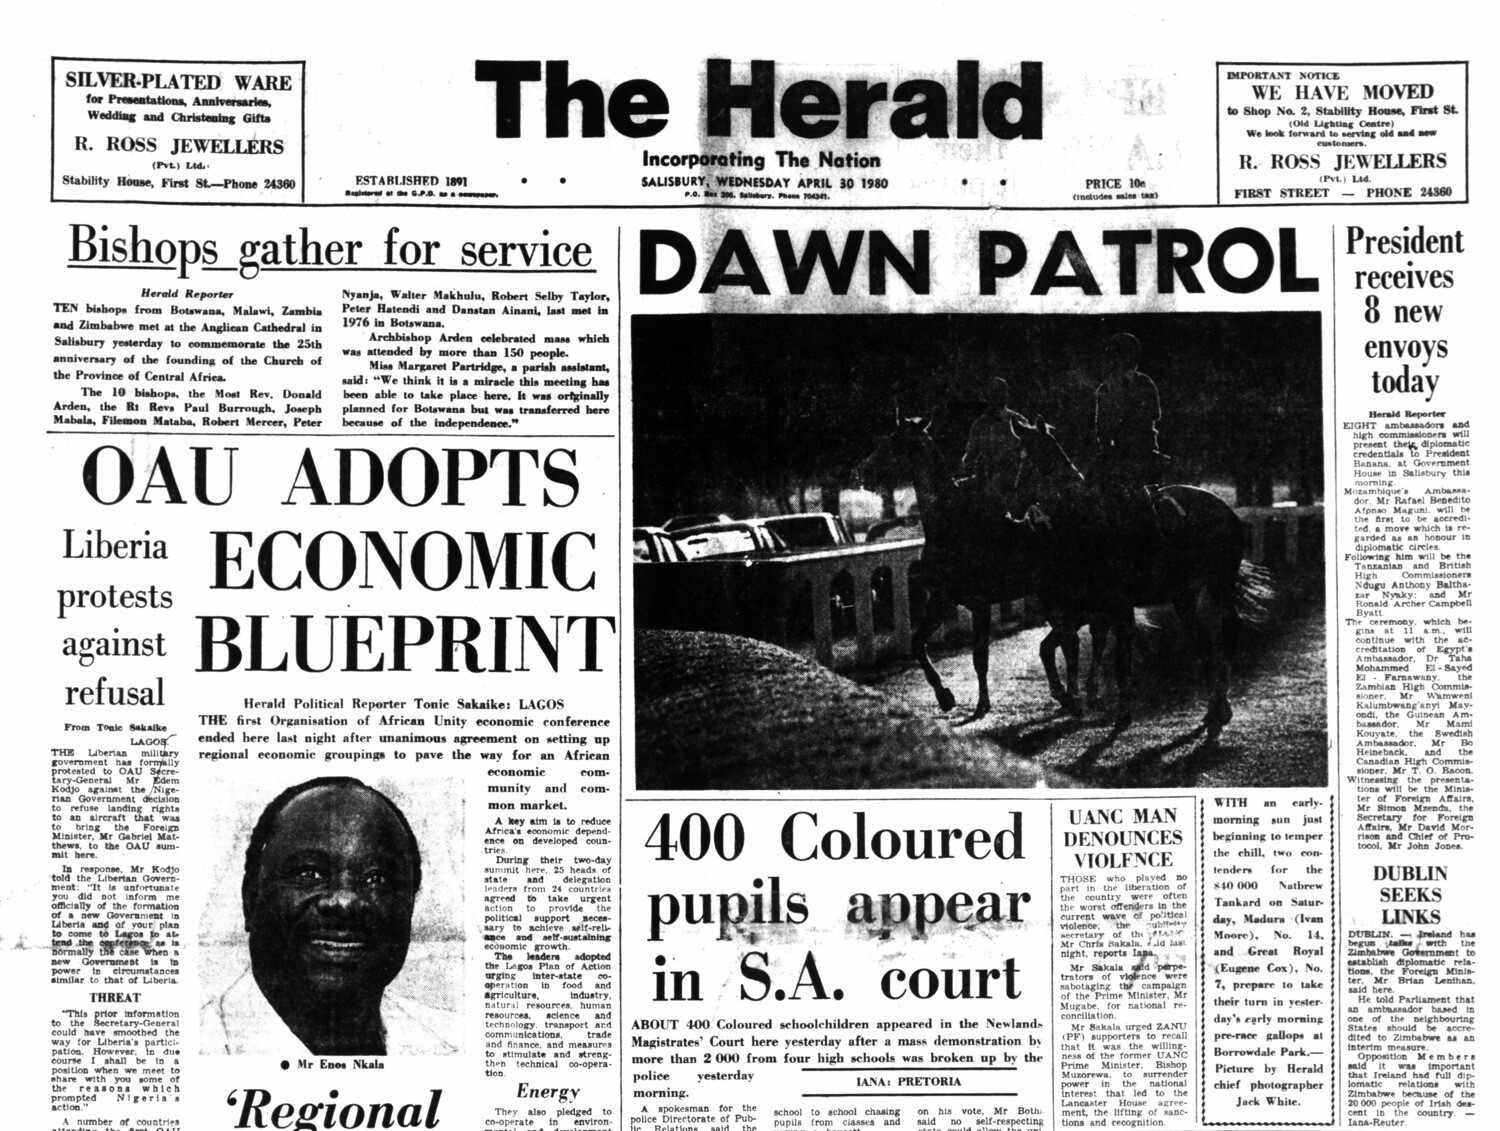 The Herald - 30 April 1980